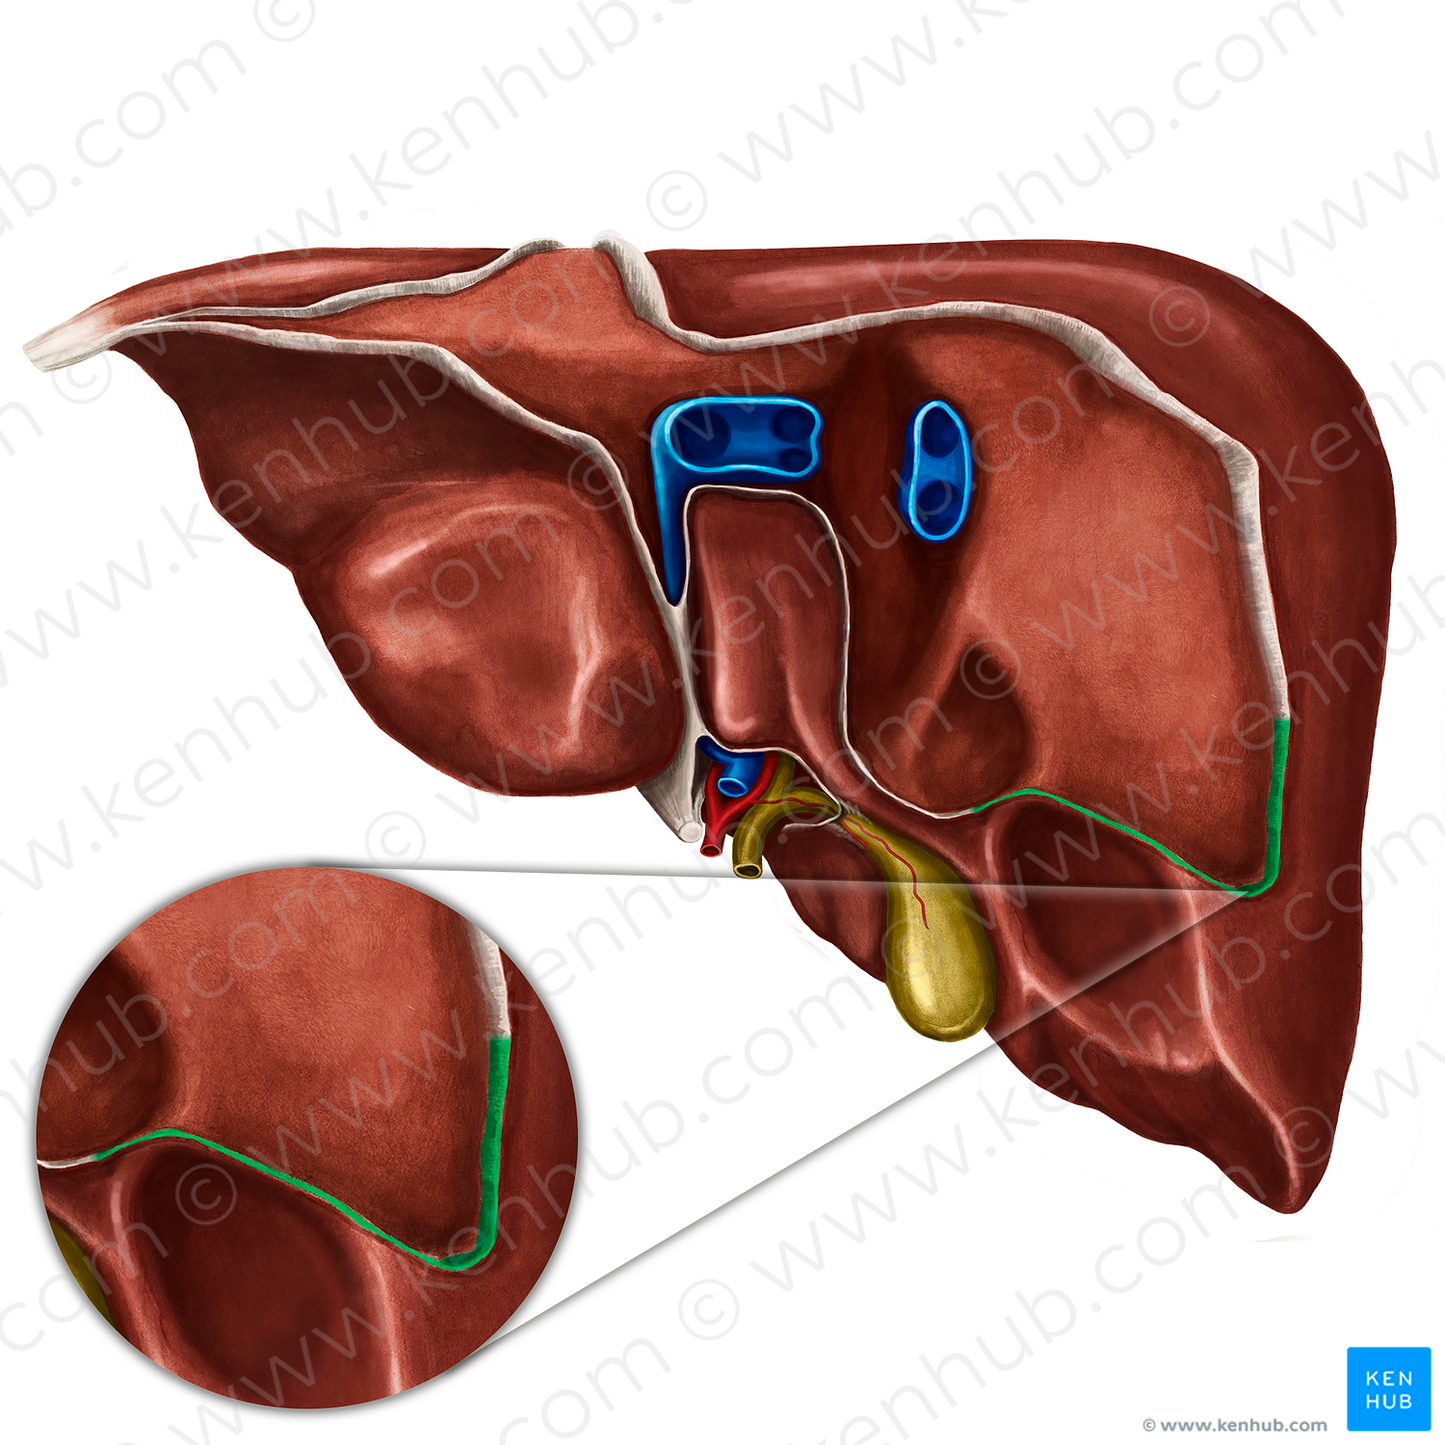 Right triangular ligament of liver (#4665)